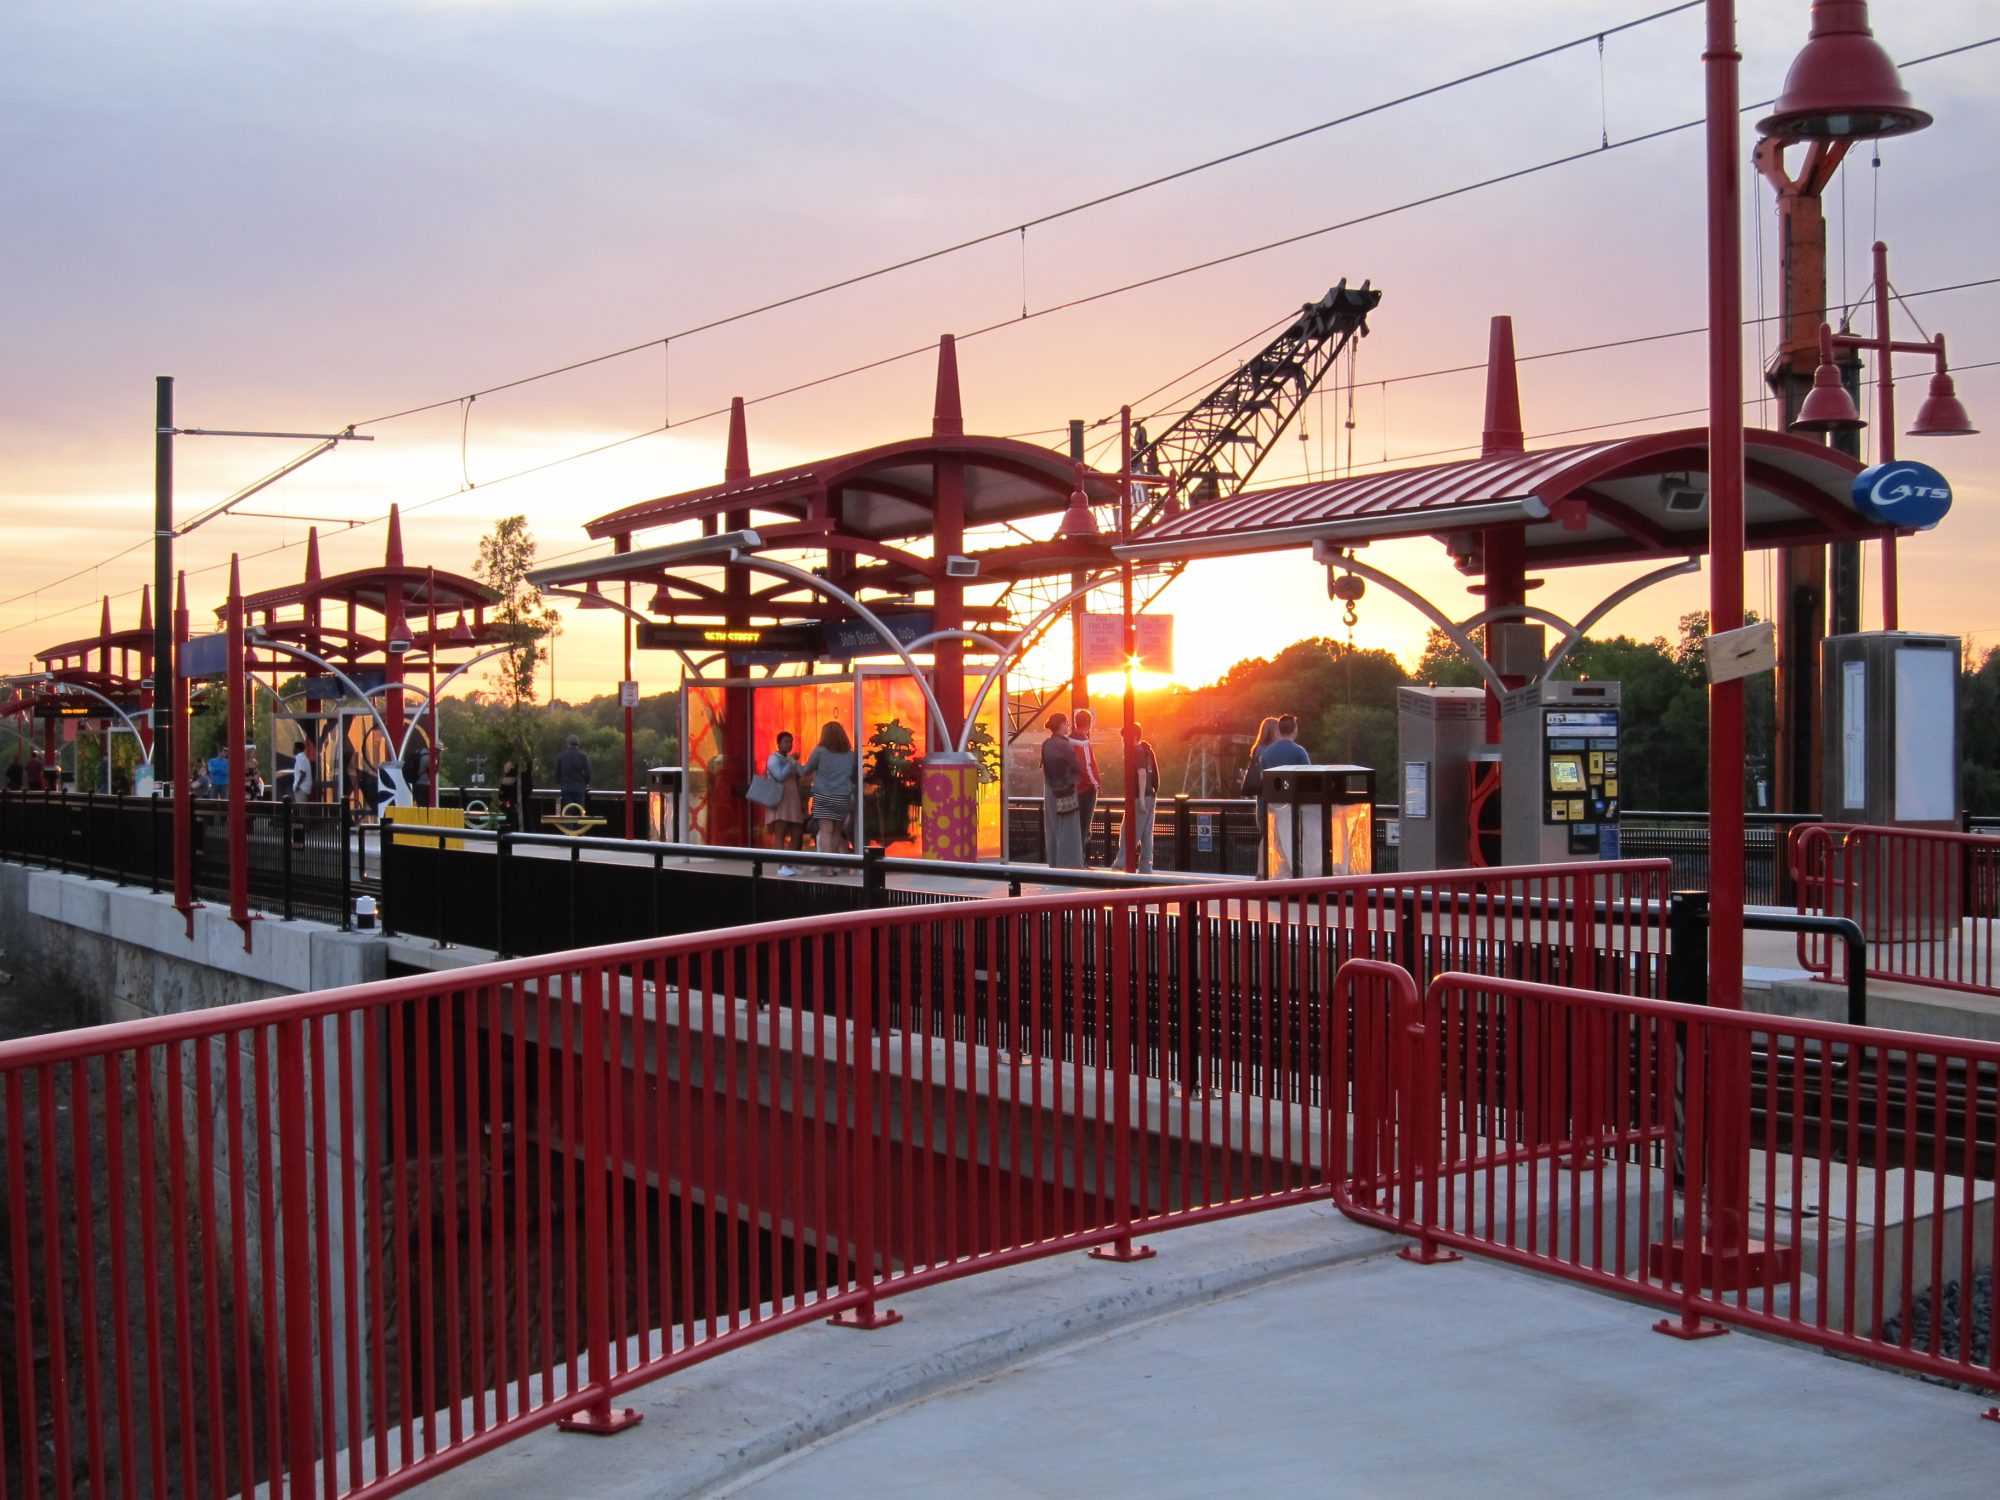 Lightrail at sunset